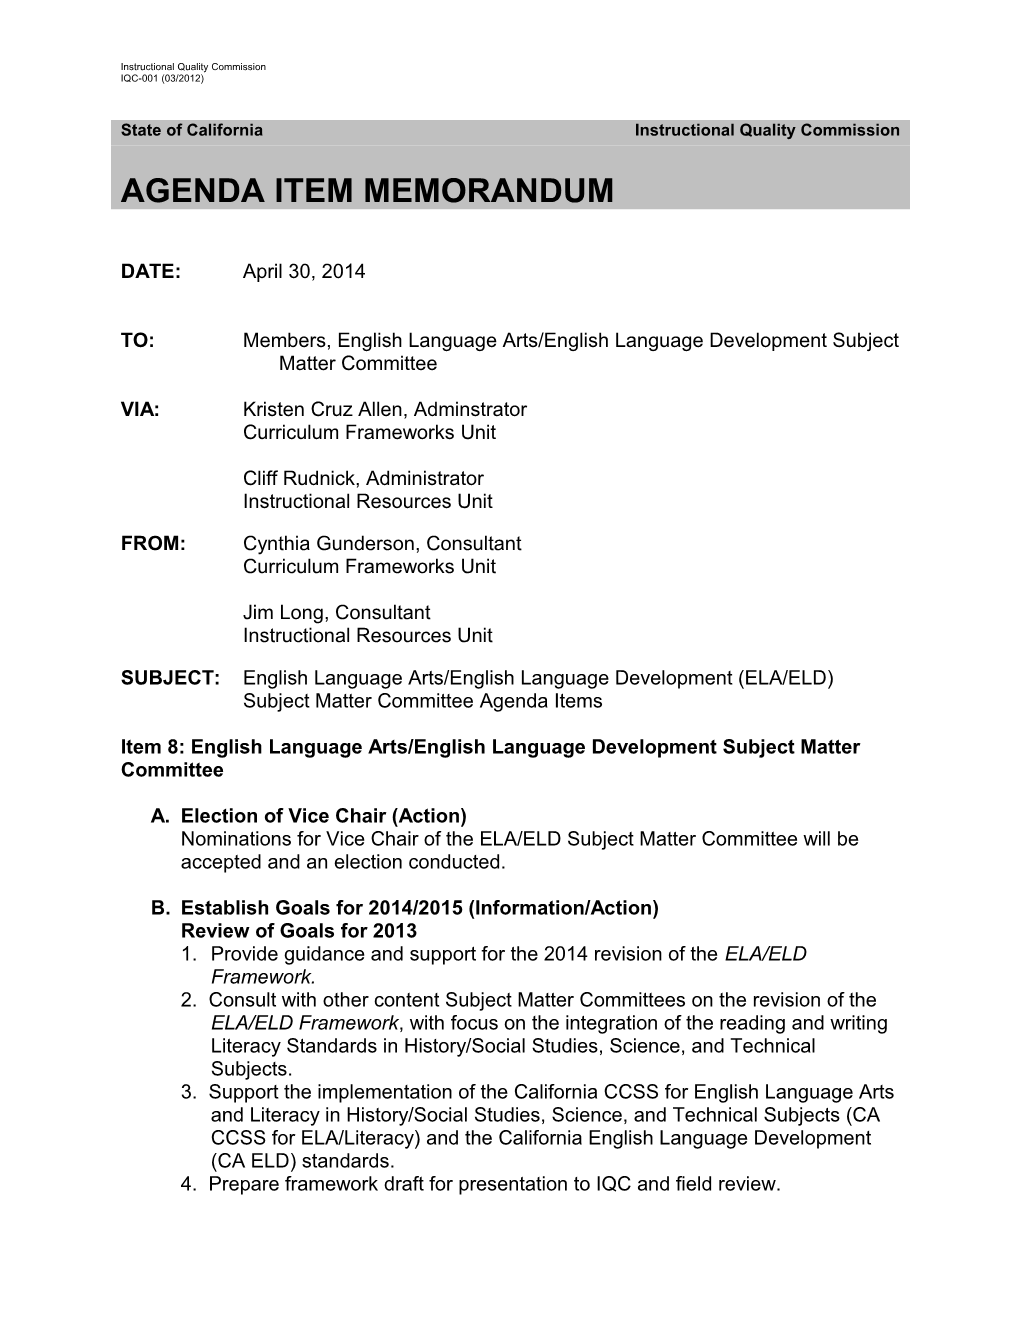 April 30, 2014 ELA/ELD SMC Memo - Instructional Quality Commission (CA Dept of Education)